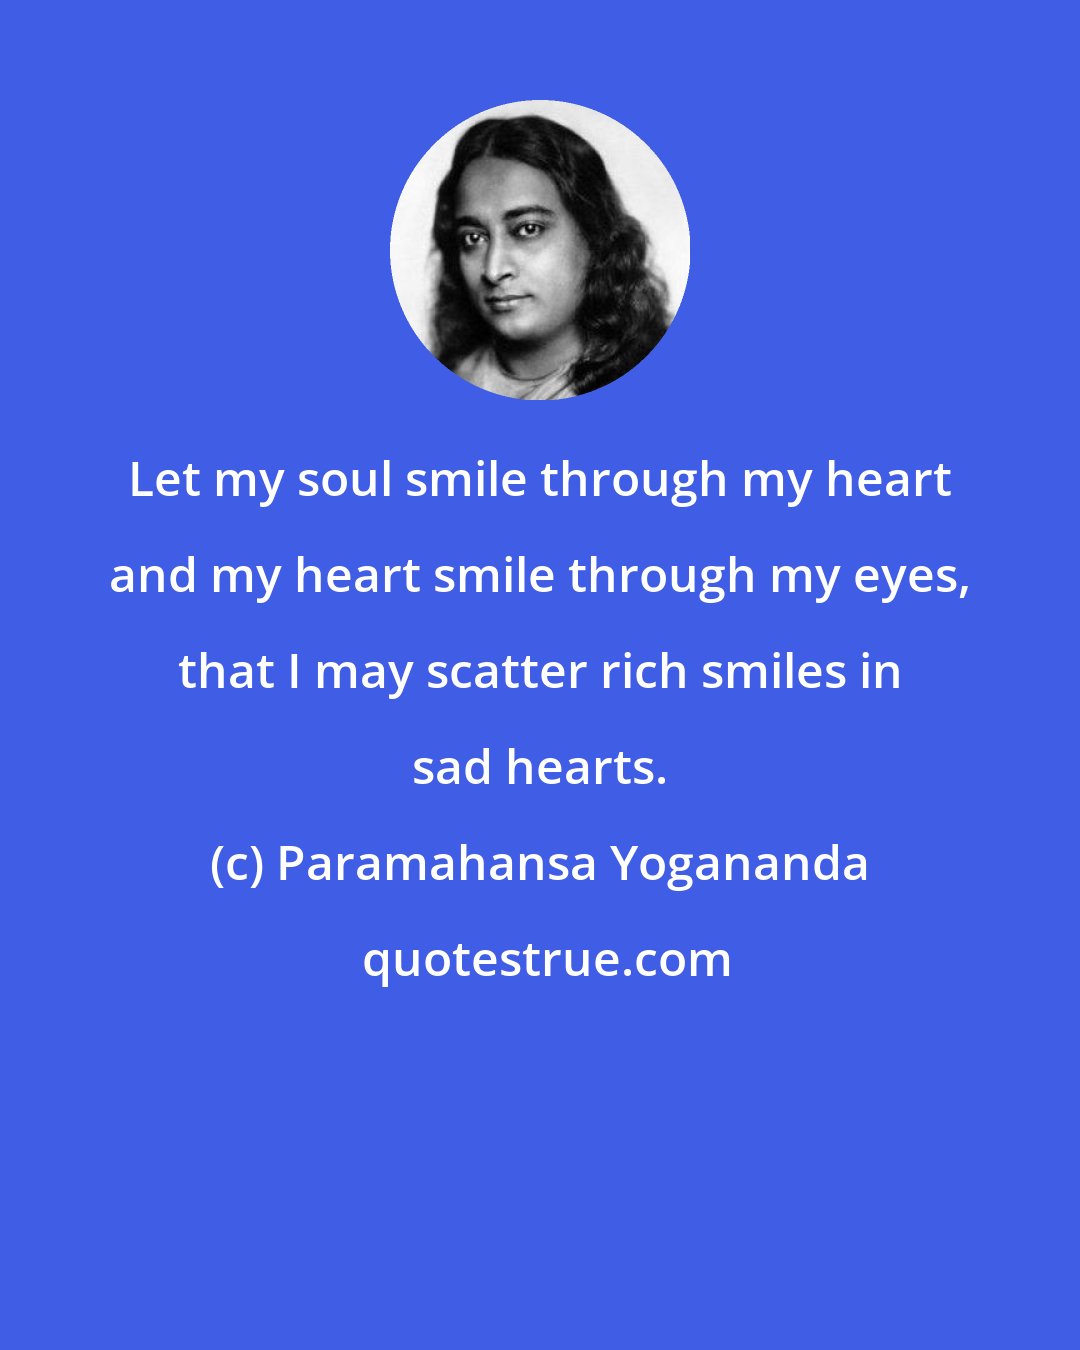 Paramahansa Yogananda: Let my soul smile through my heart and my heart smile through my eyes, that I may scatter rich smiles in sad hearts.